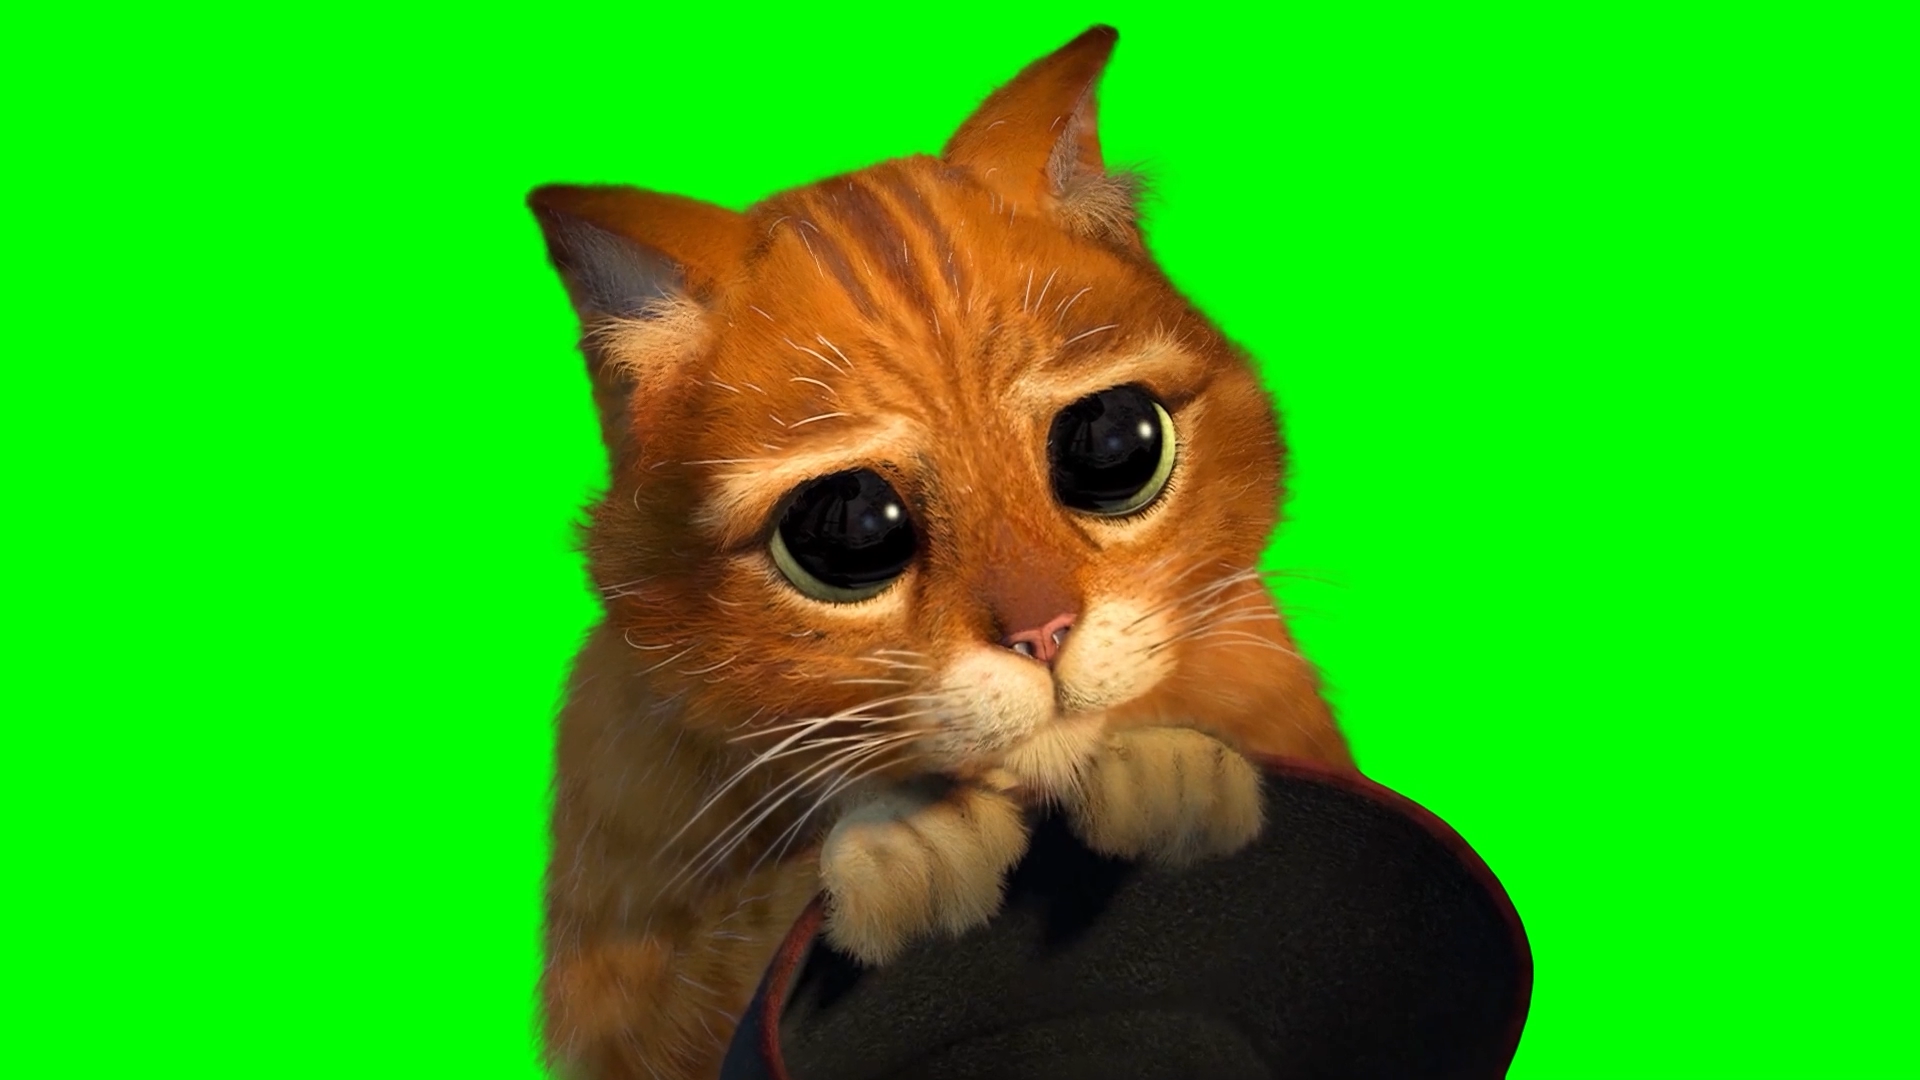 Puss in Boots Cute Cat Eyes - Shrek 2 (Green Screen)